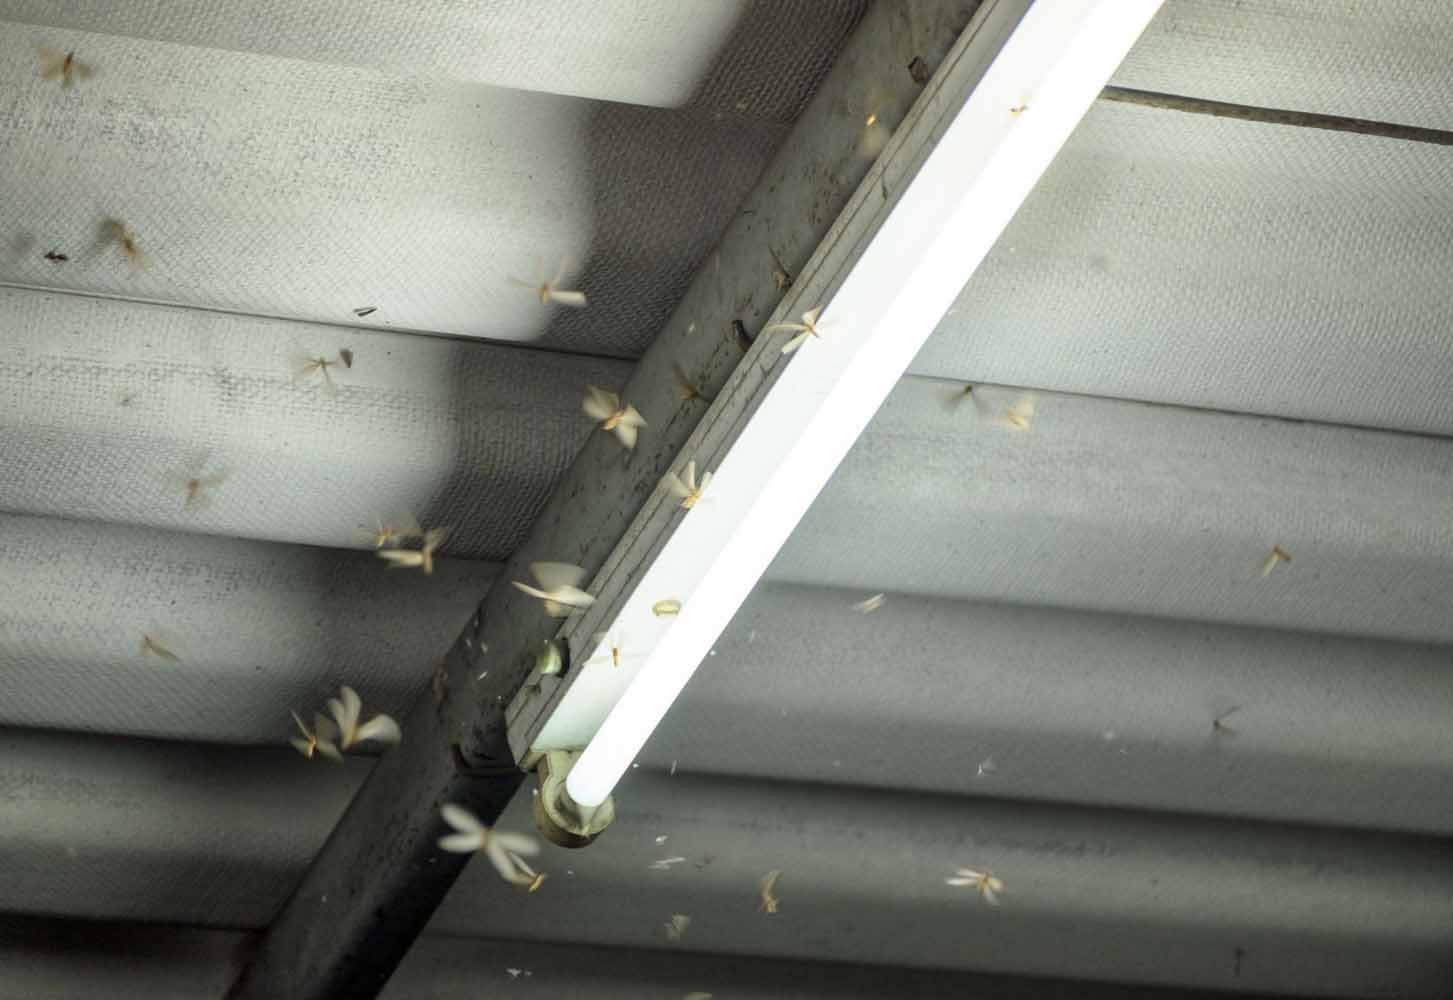 Termites swarming around a fluorescent light on a porch